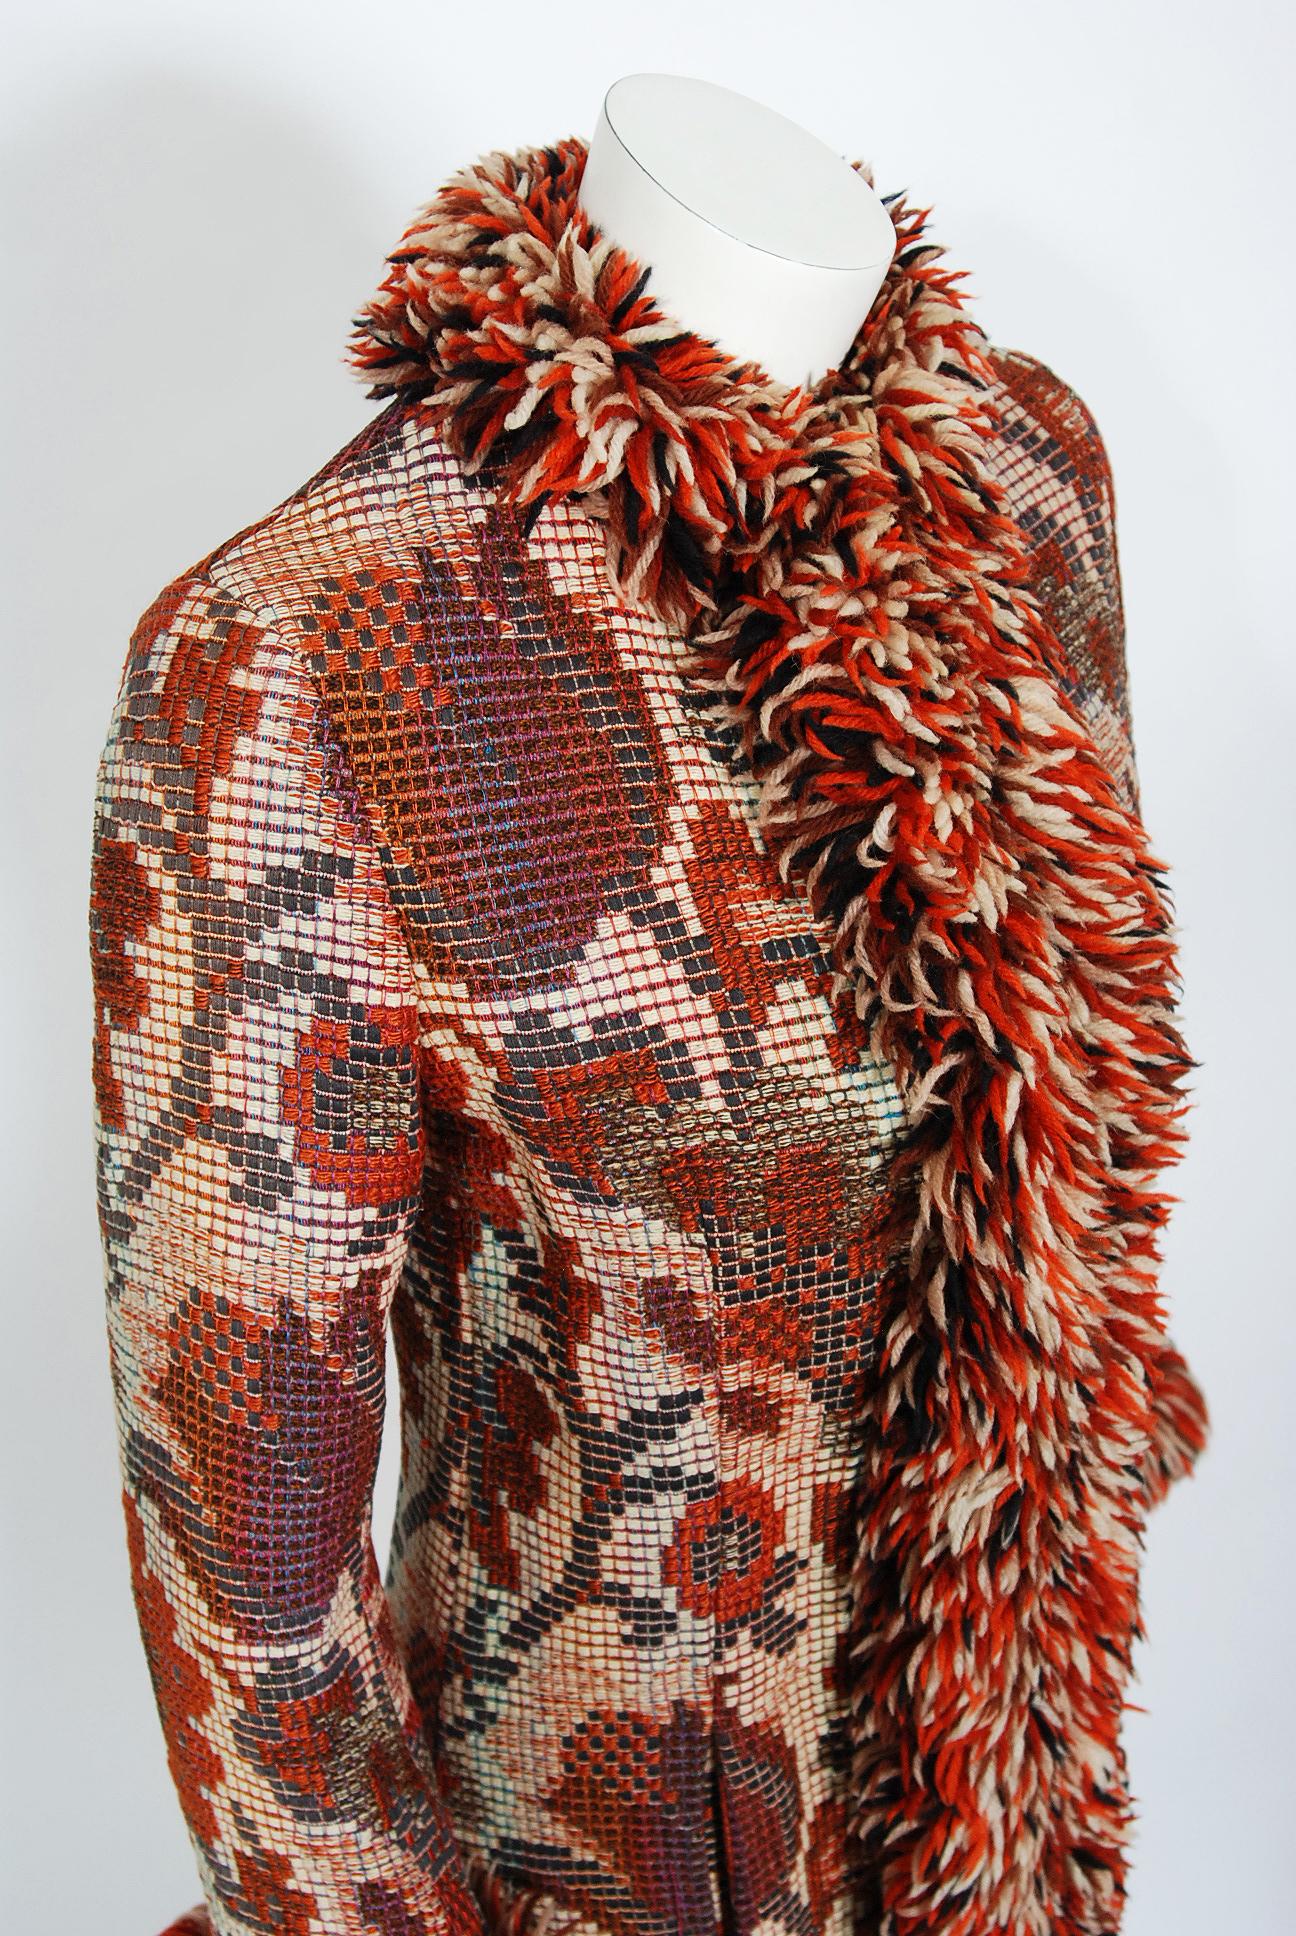 vintage tapestry coat